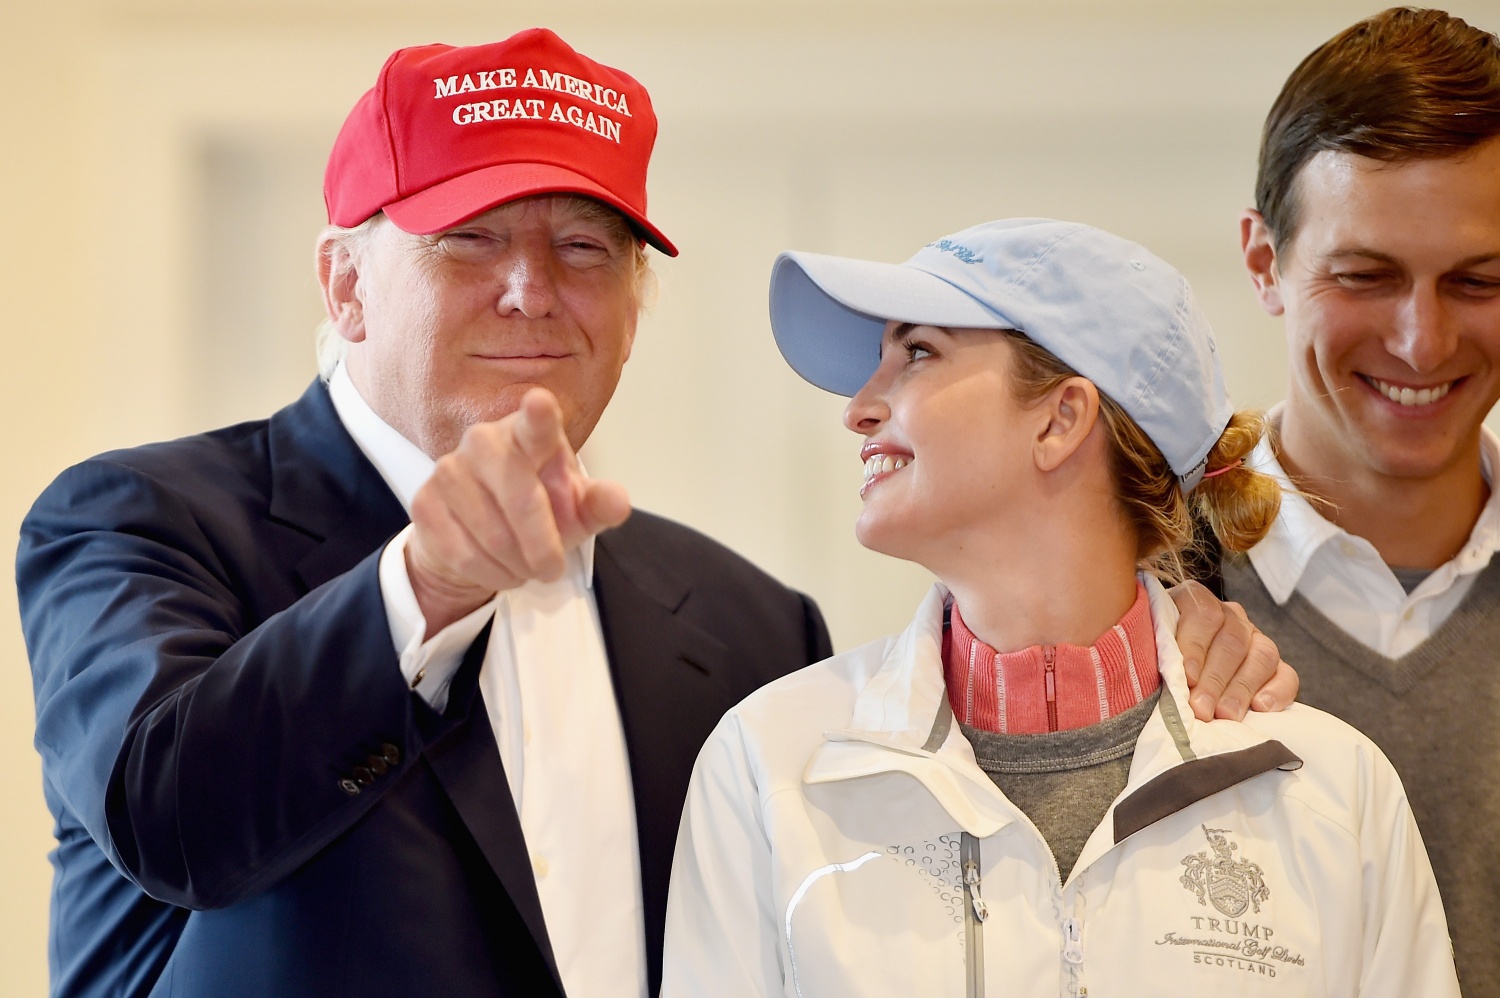 Donald Trump and Ivanka Trump